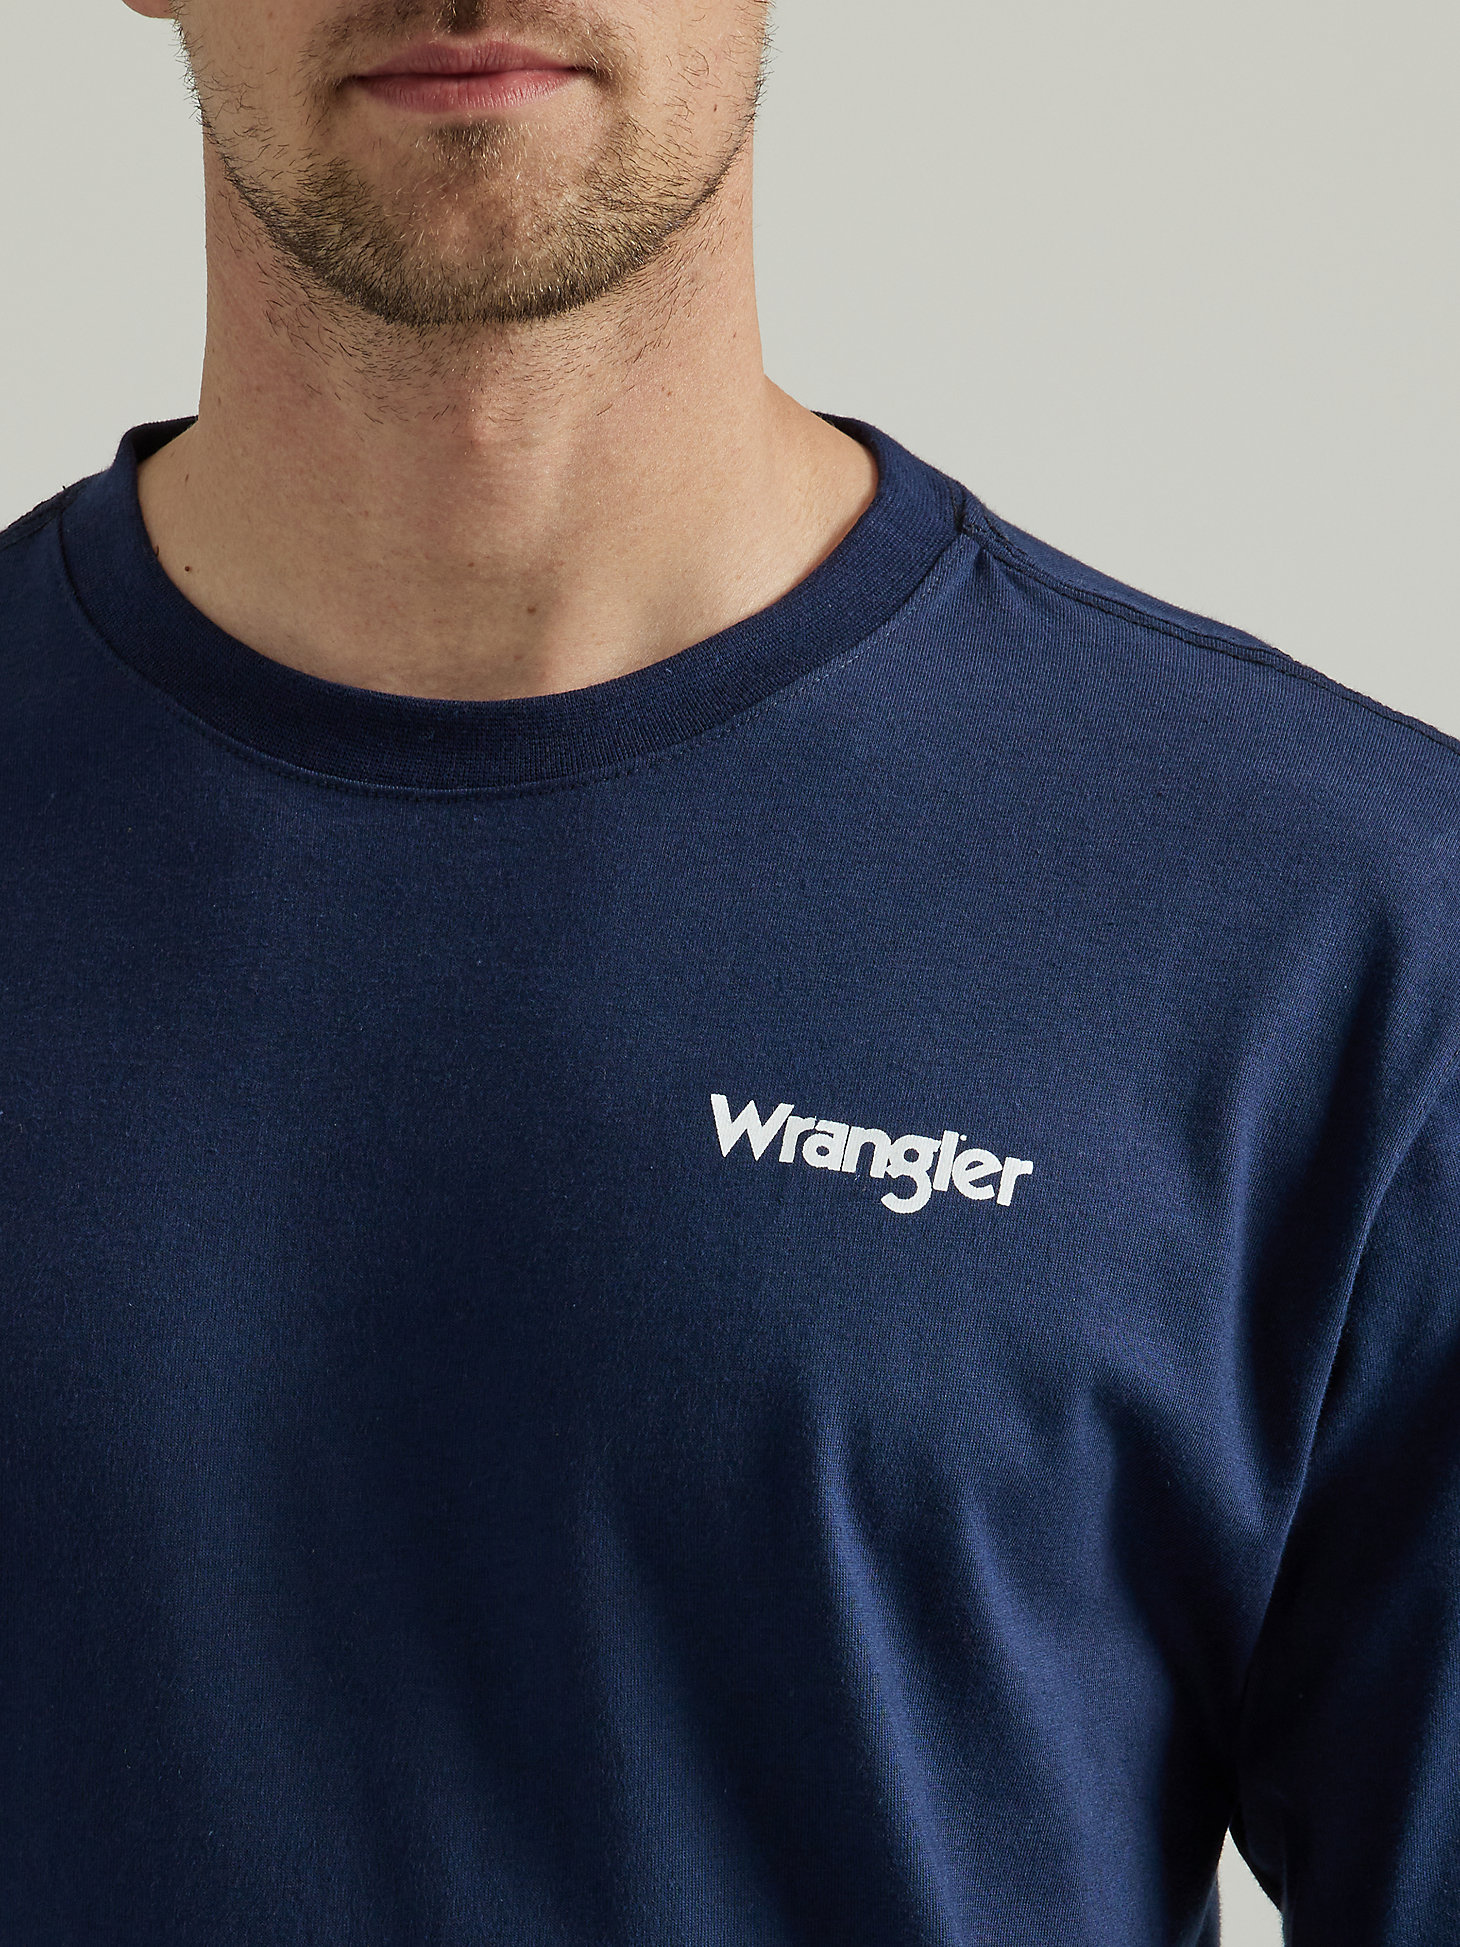 Wrangler® FR Flame Resistant Long Sleeve Back Graphic T-Shirt in Indigo alternative view 4